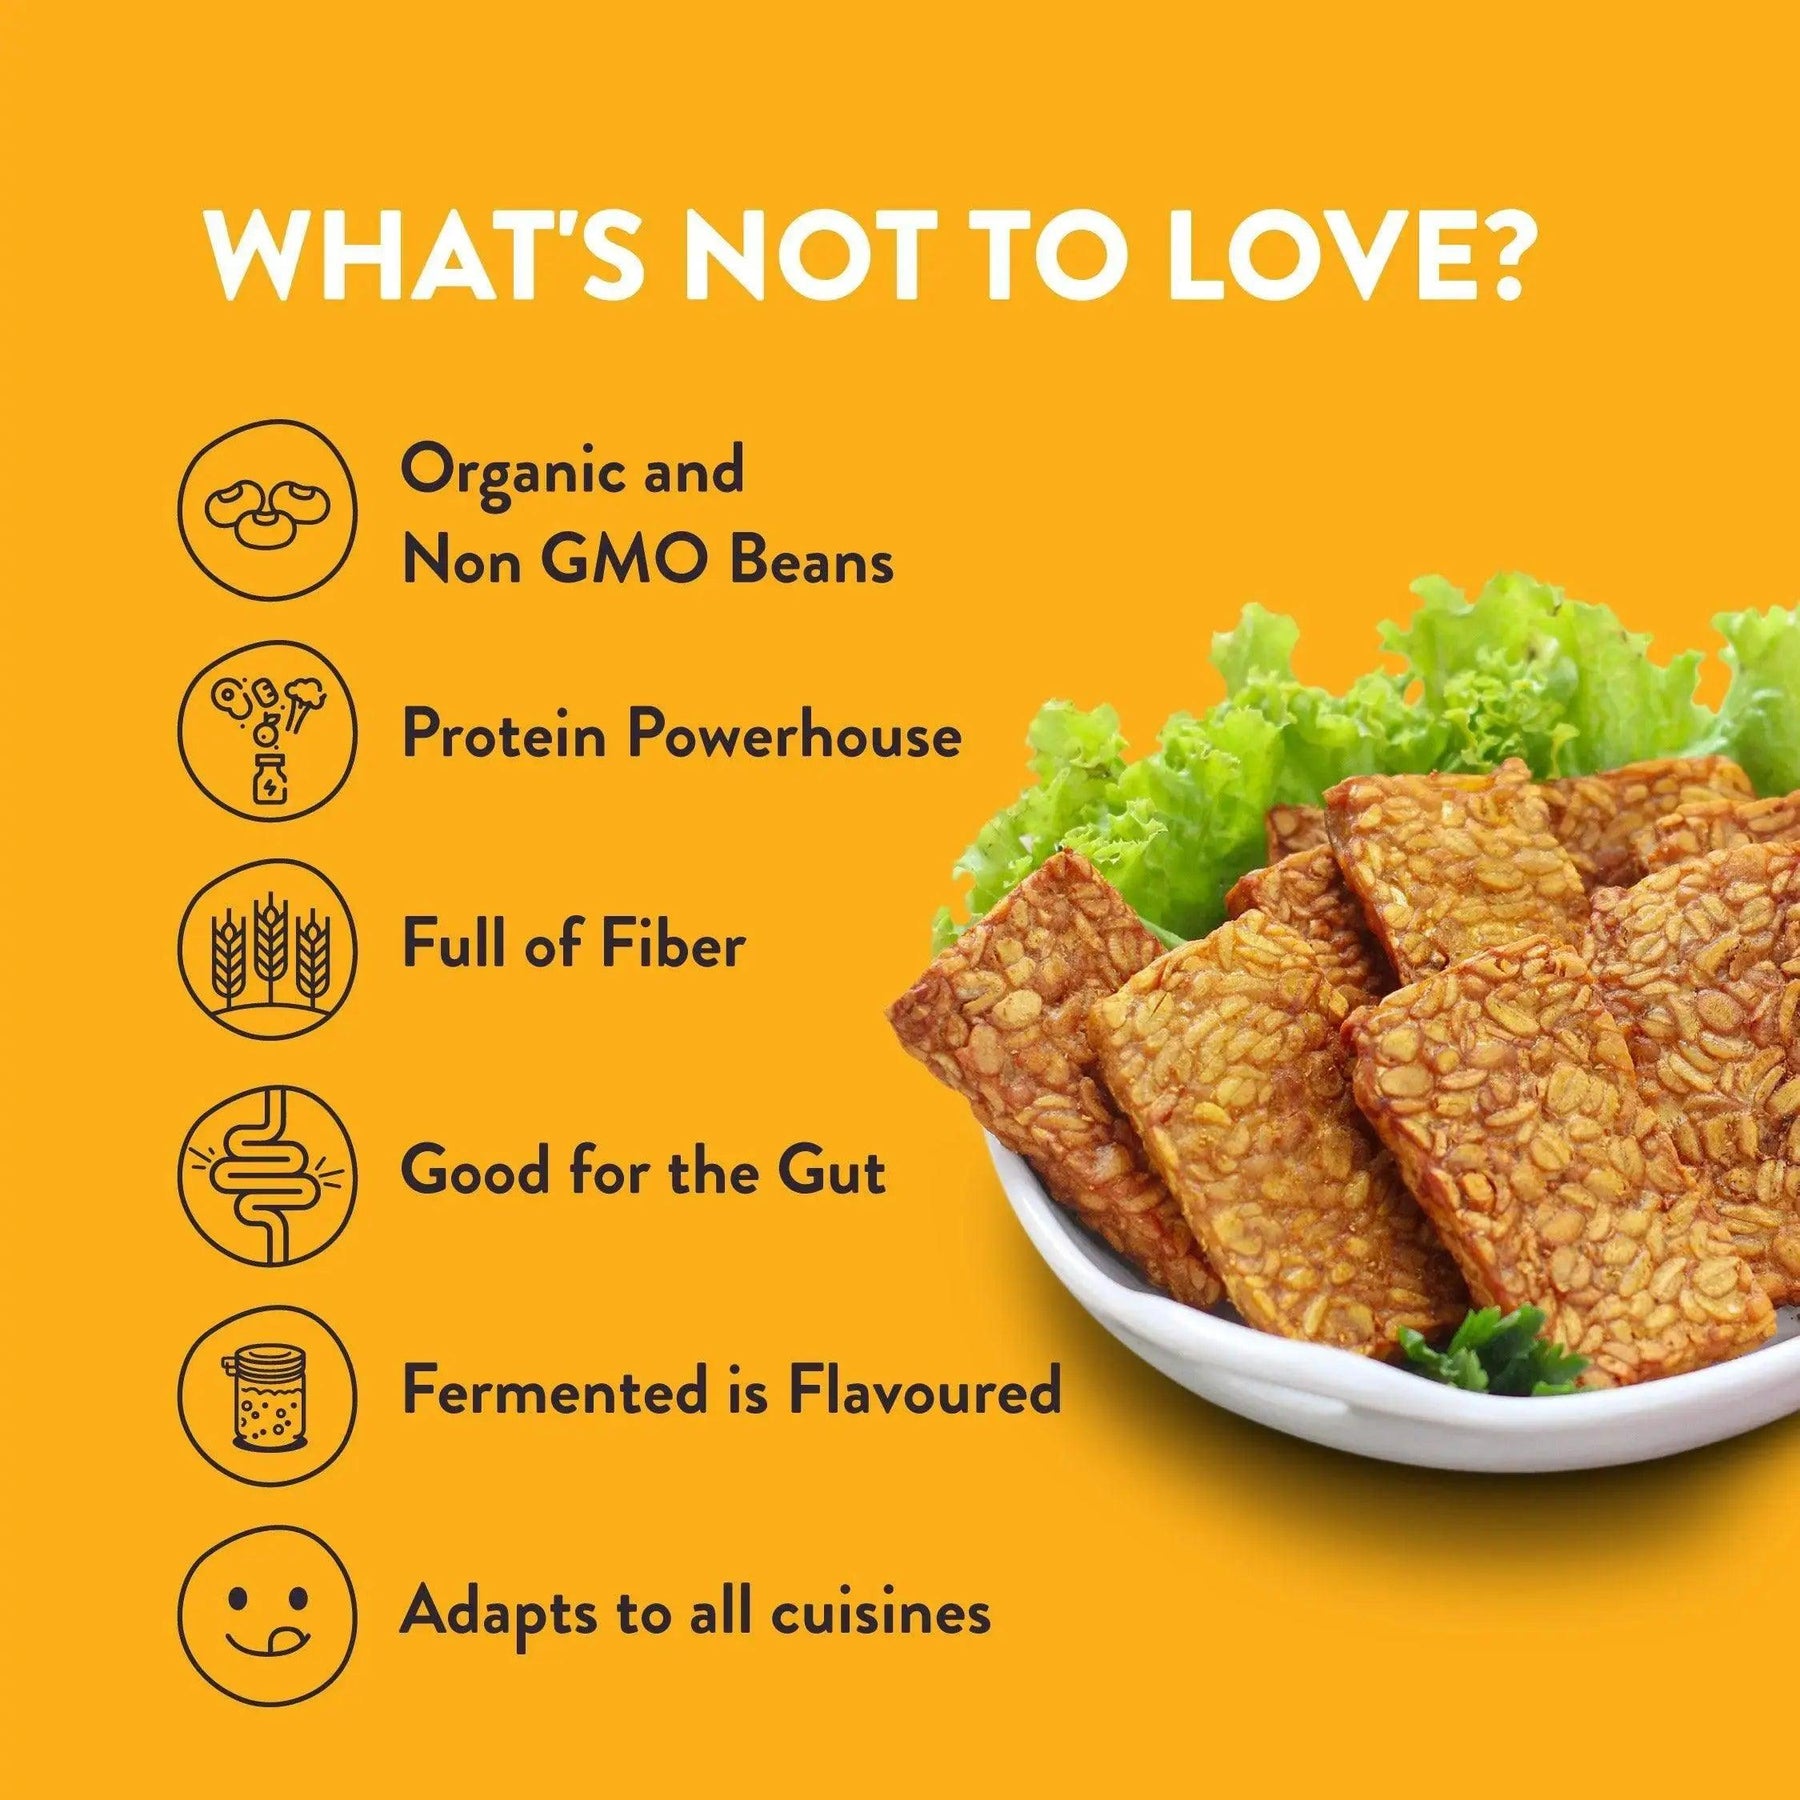 Love bulk tempeh in Mumbai: Zoh Hot and Sweet, organic, non-GMO, protein, fiber, gut-friendly, globally adaptable cuisine